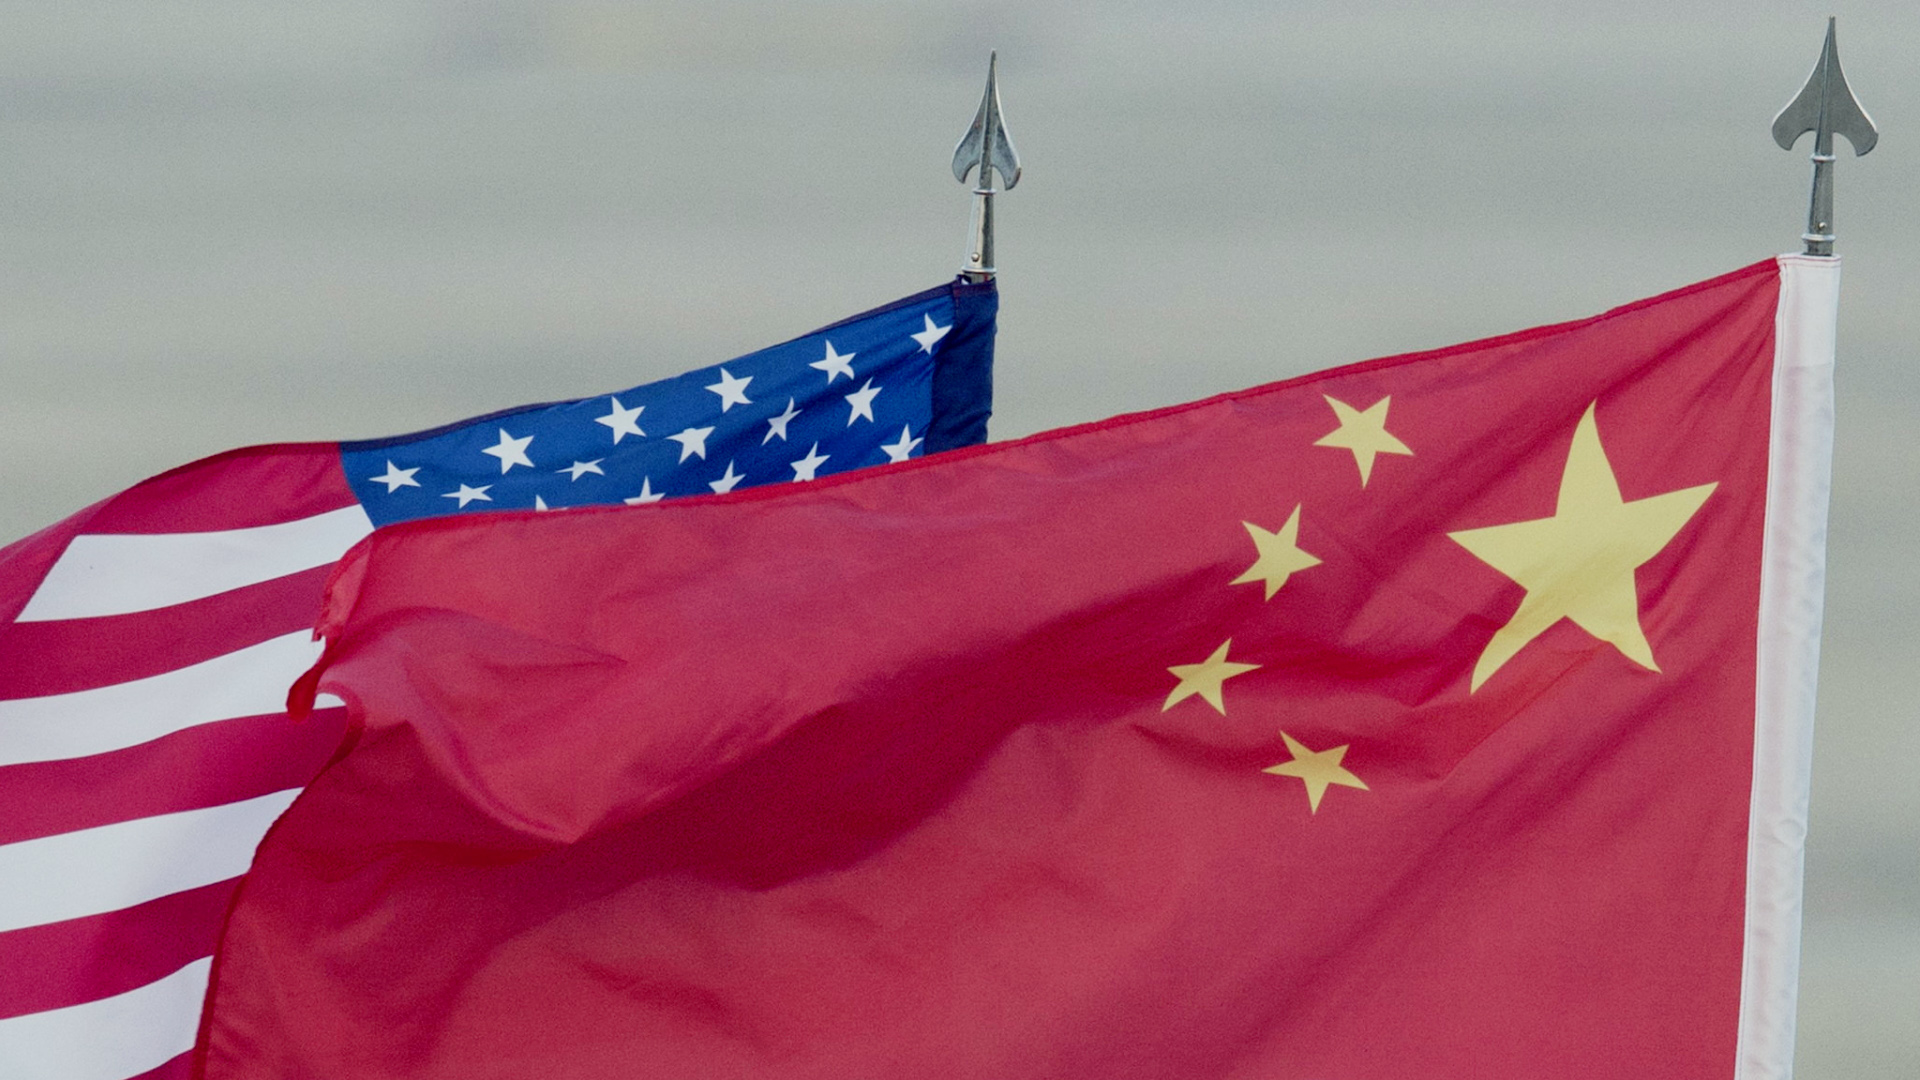 Flagge der USA und Chinas | dpa